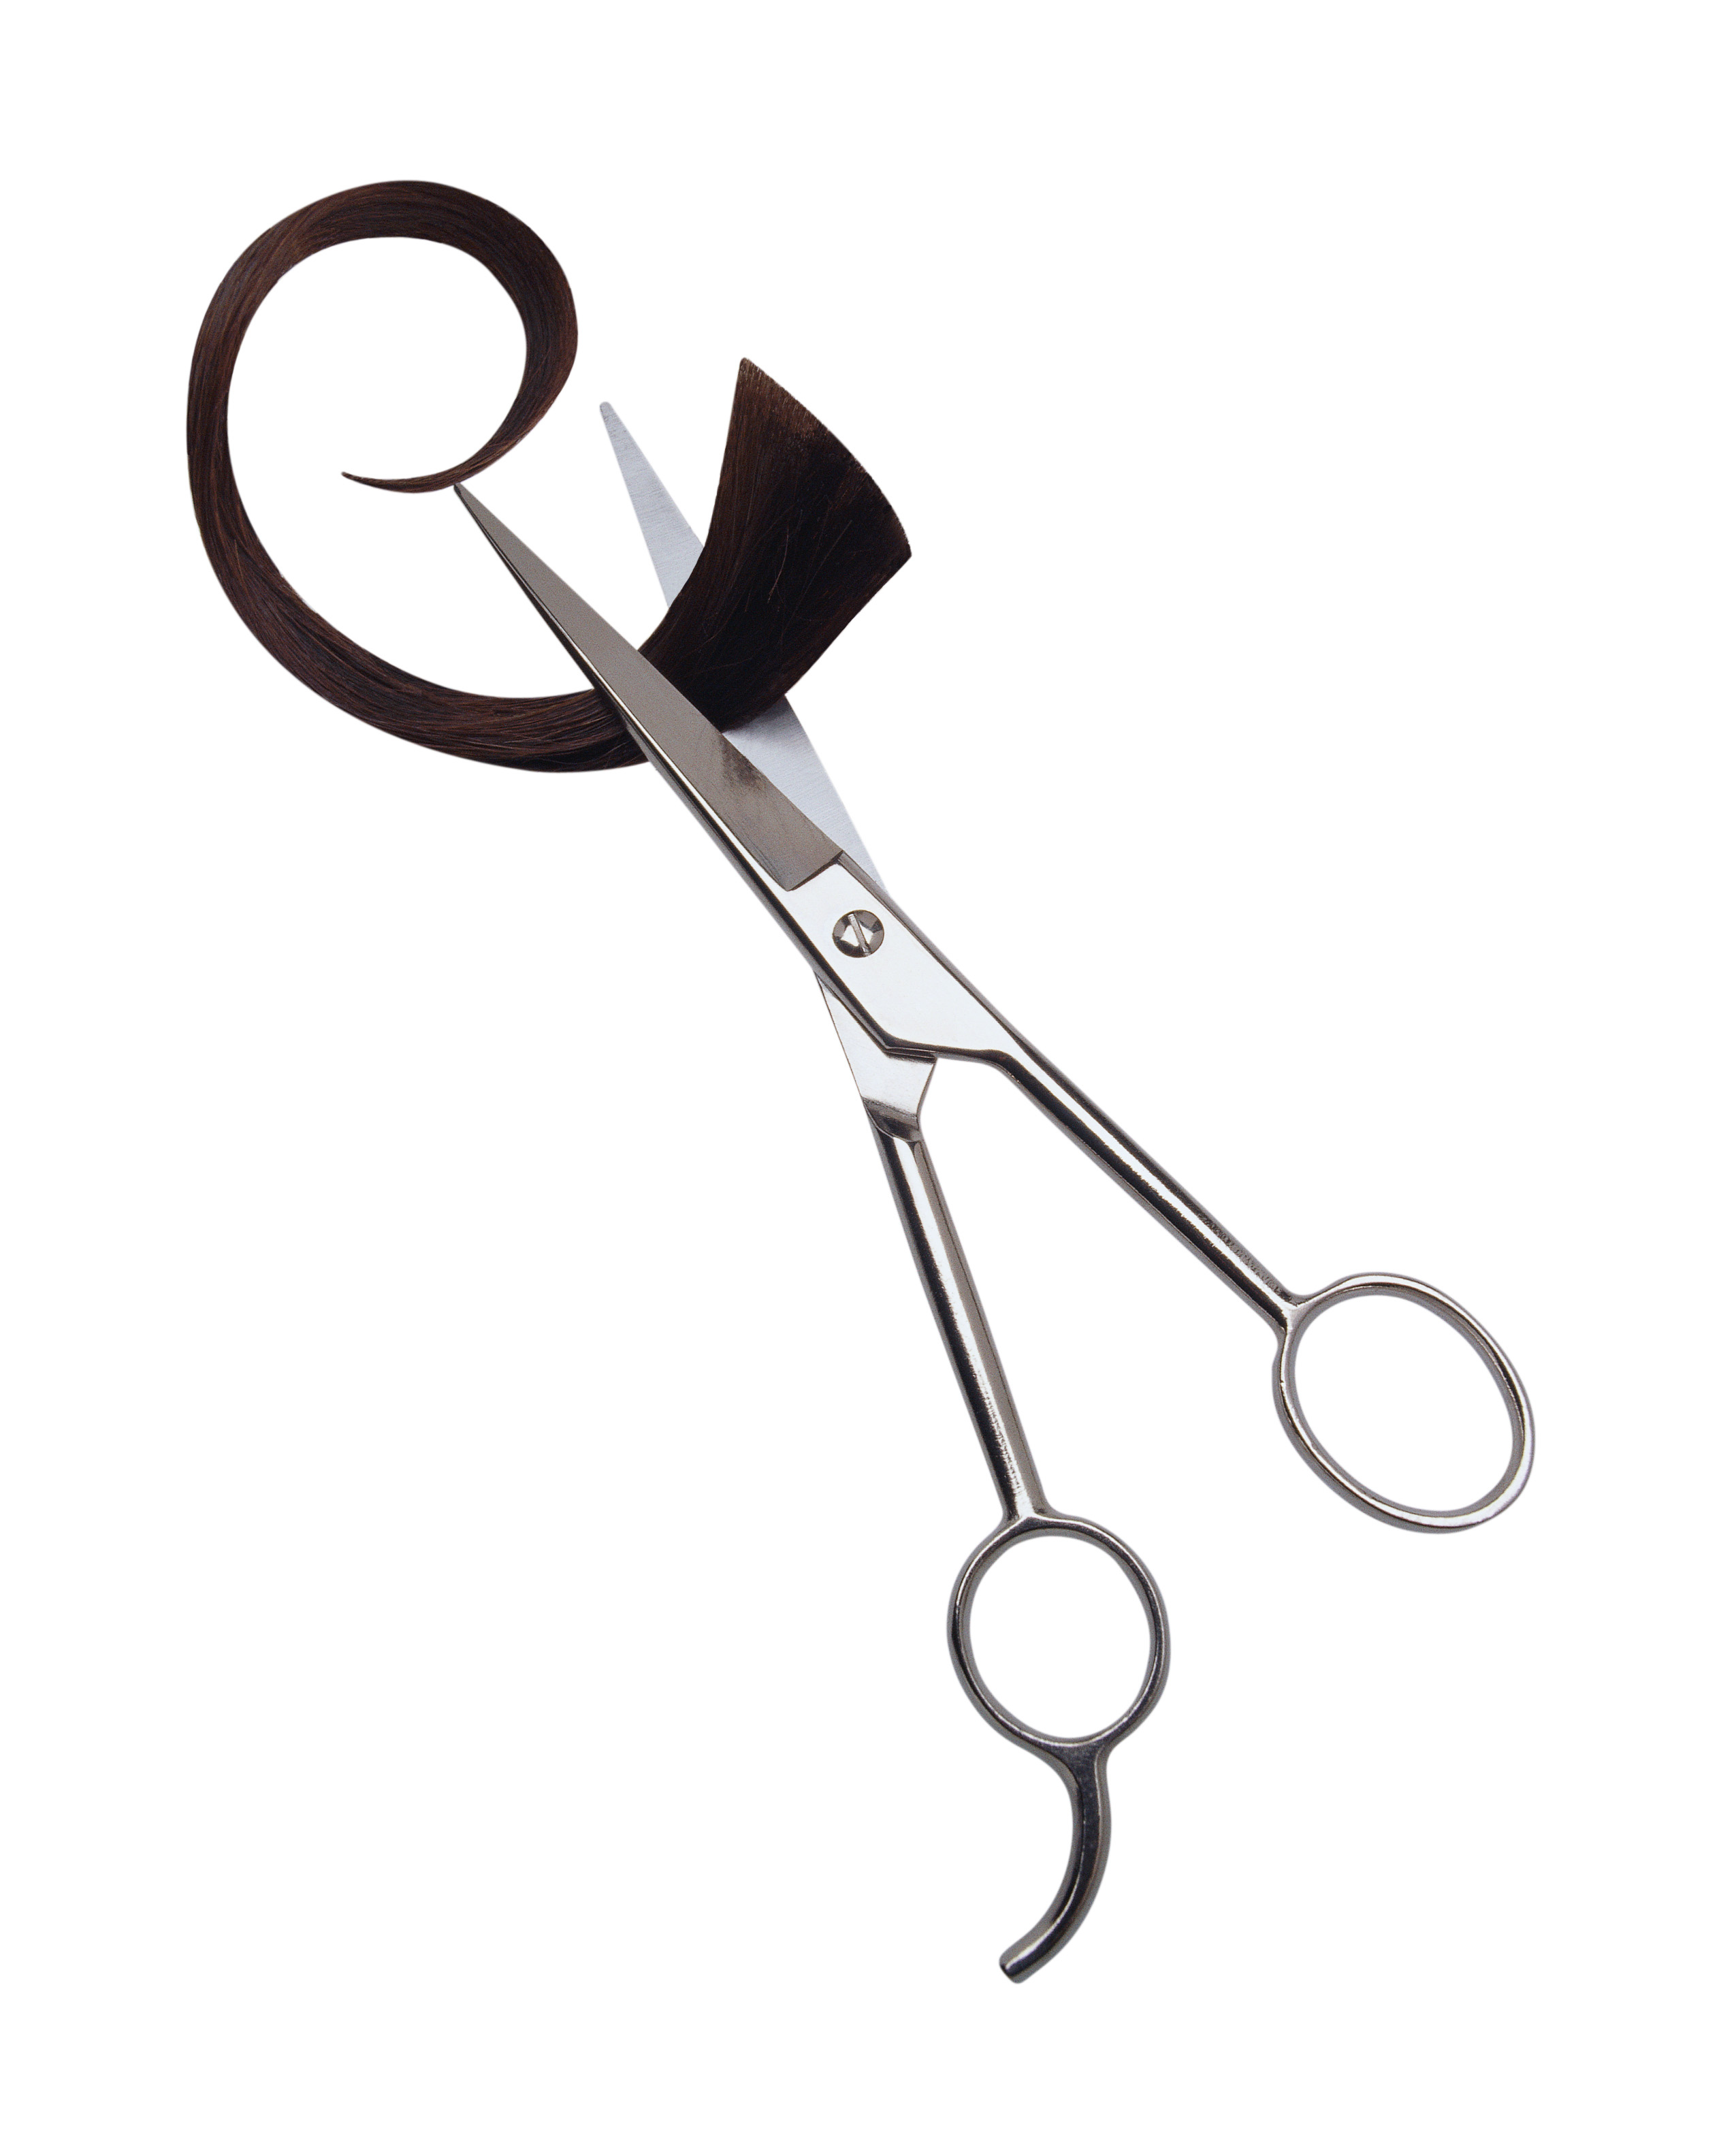 hair scissors: vector scissor